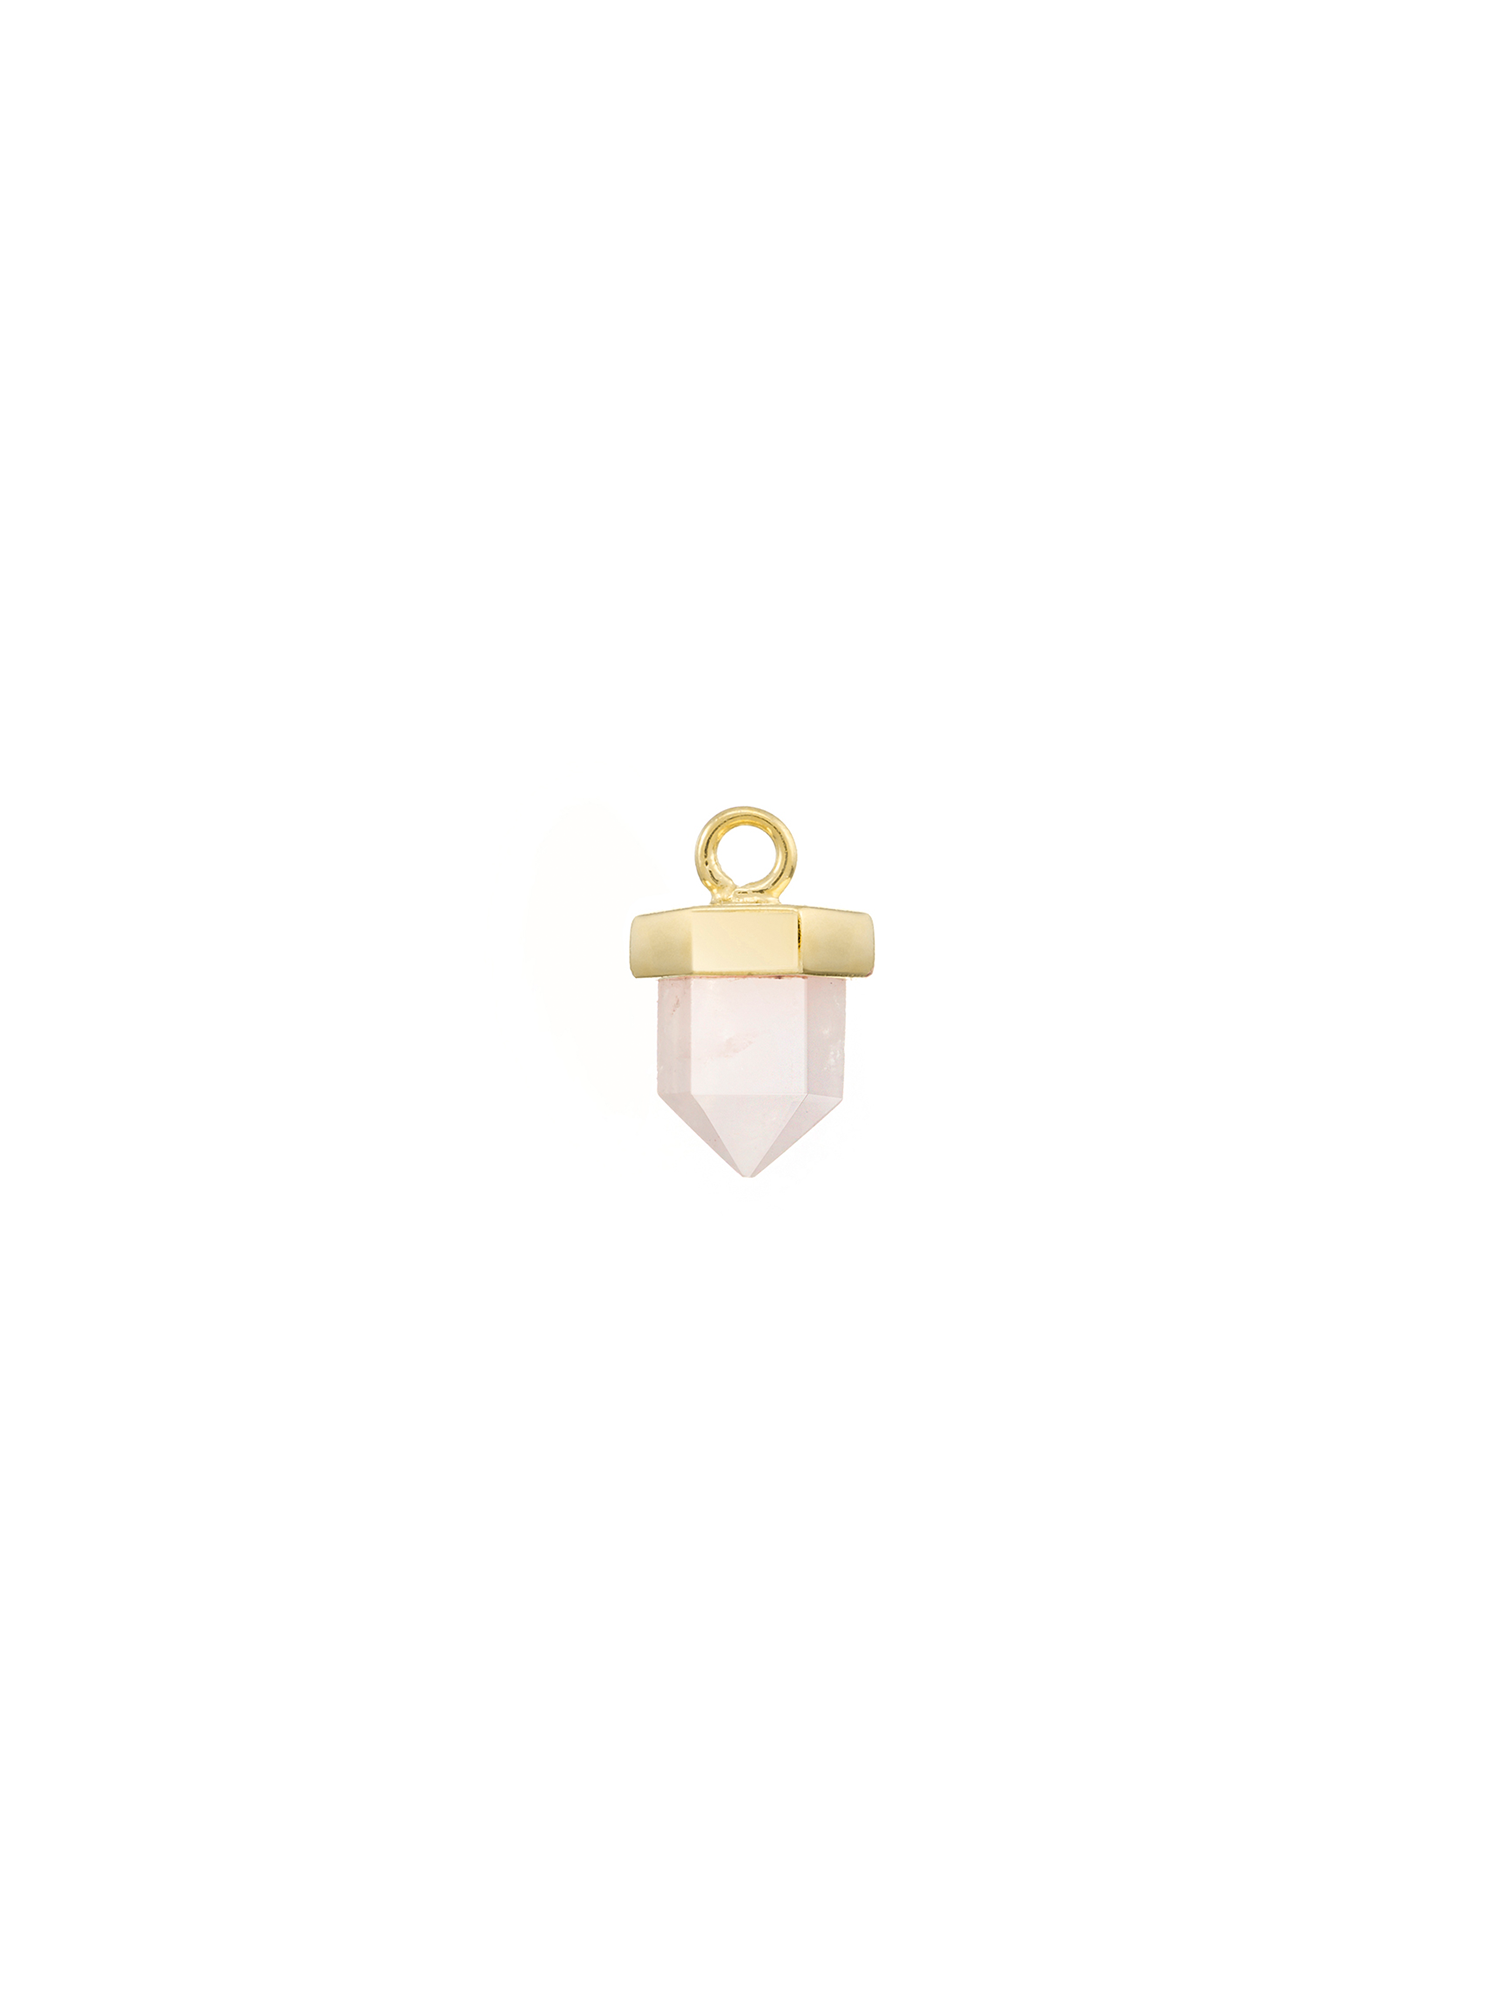 fire flies #1 earring charm | rose quartz